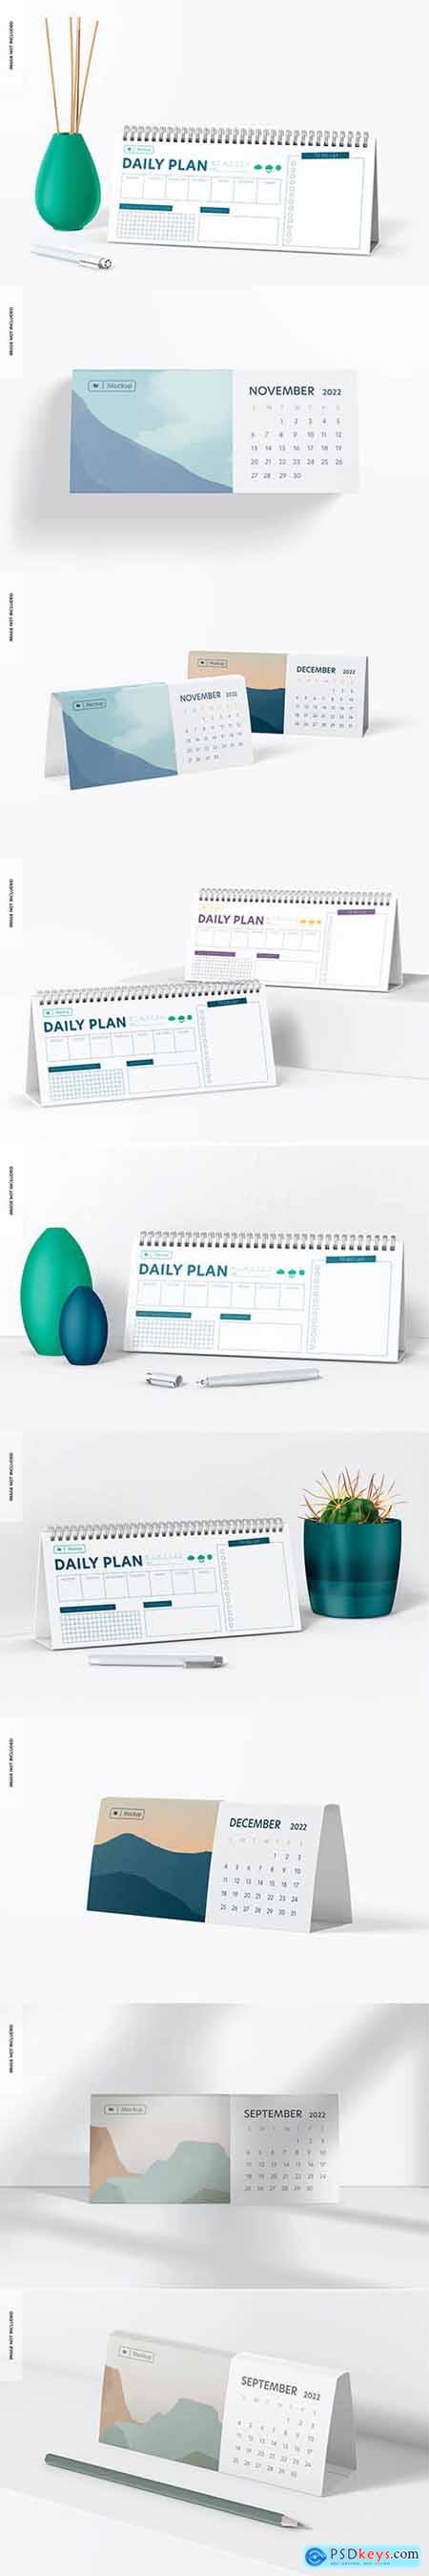 Horizontal desk calendar mockup